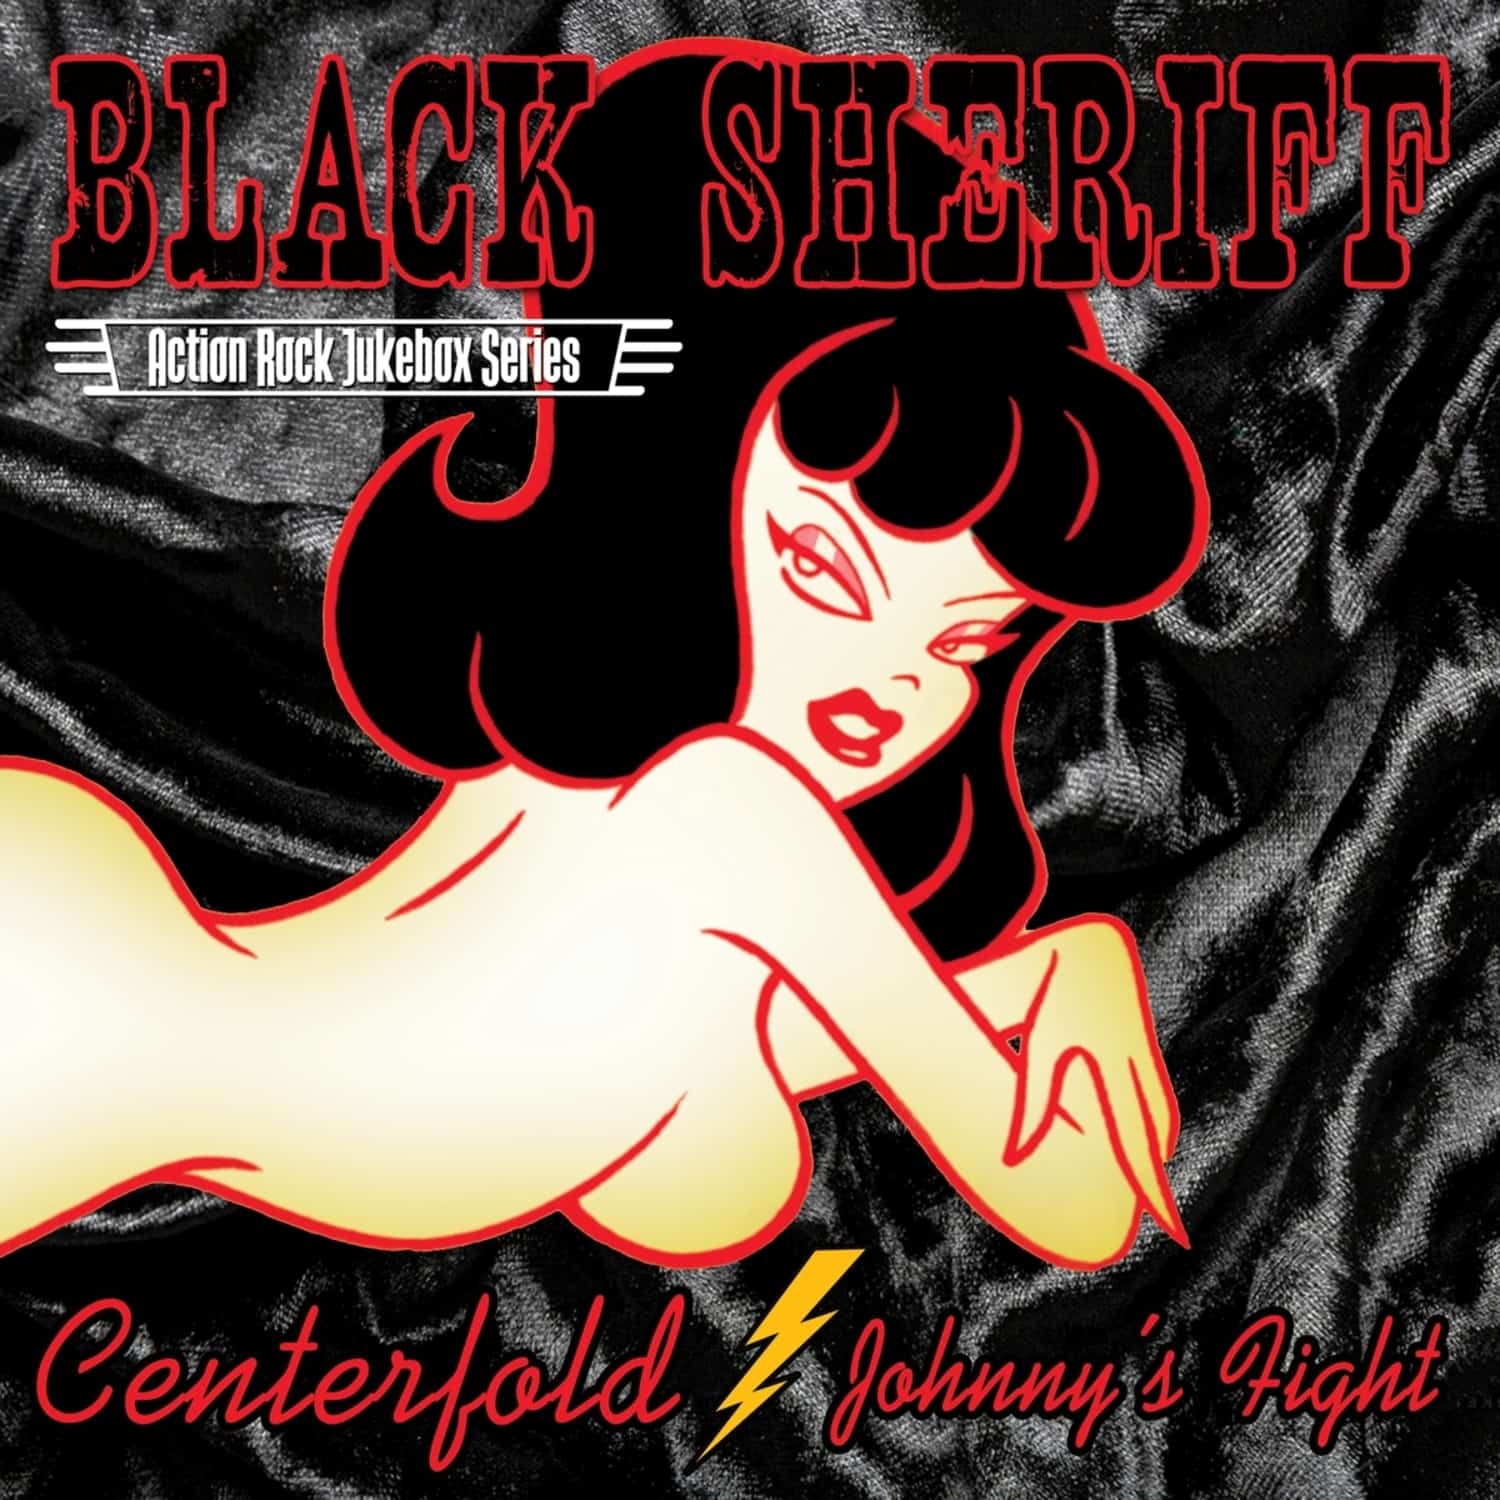 Black Sheriff - 7-CENTERFOLD / JOHNNY S FIGHT 